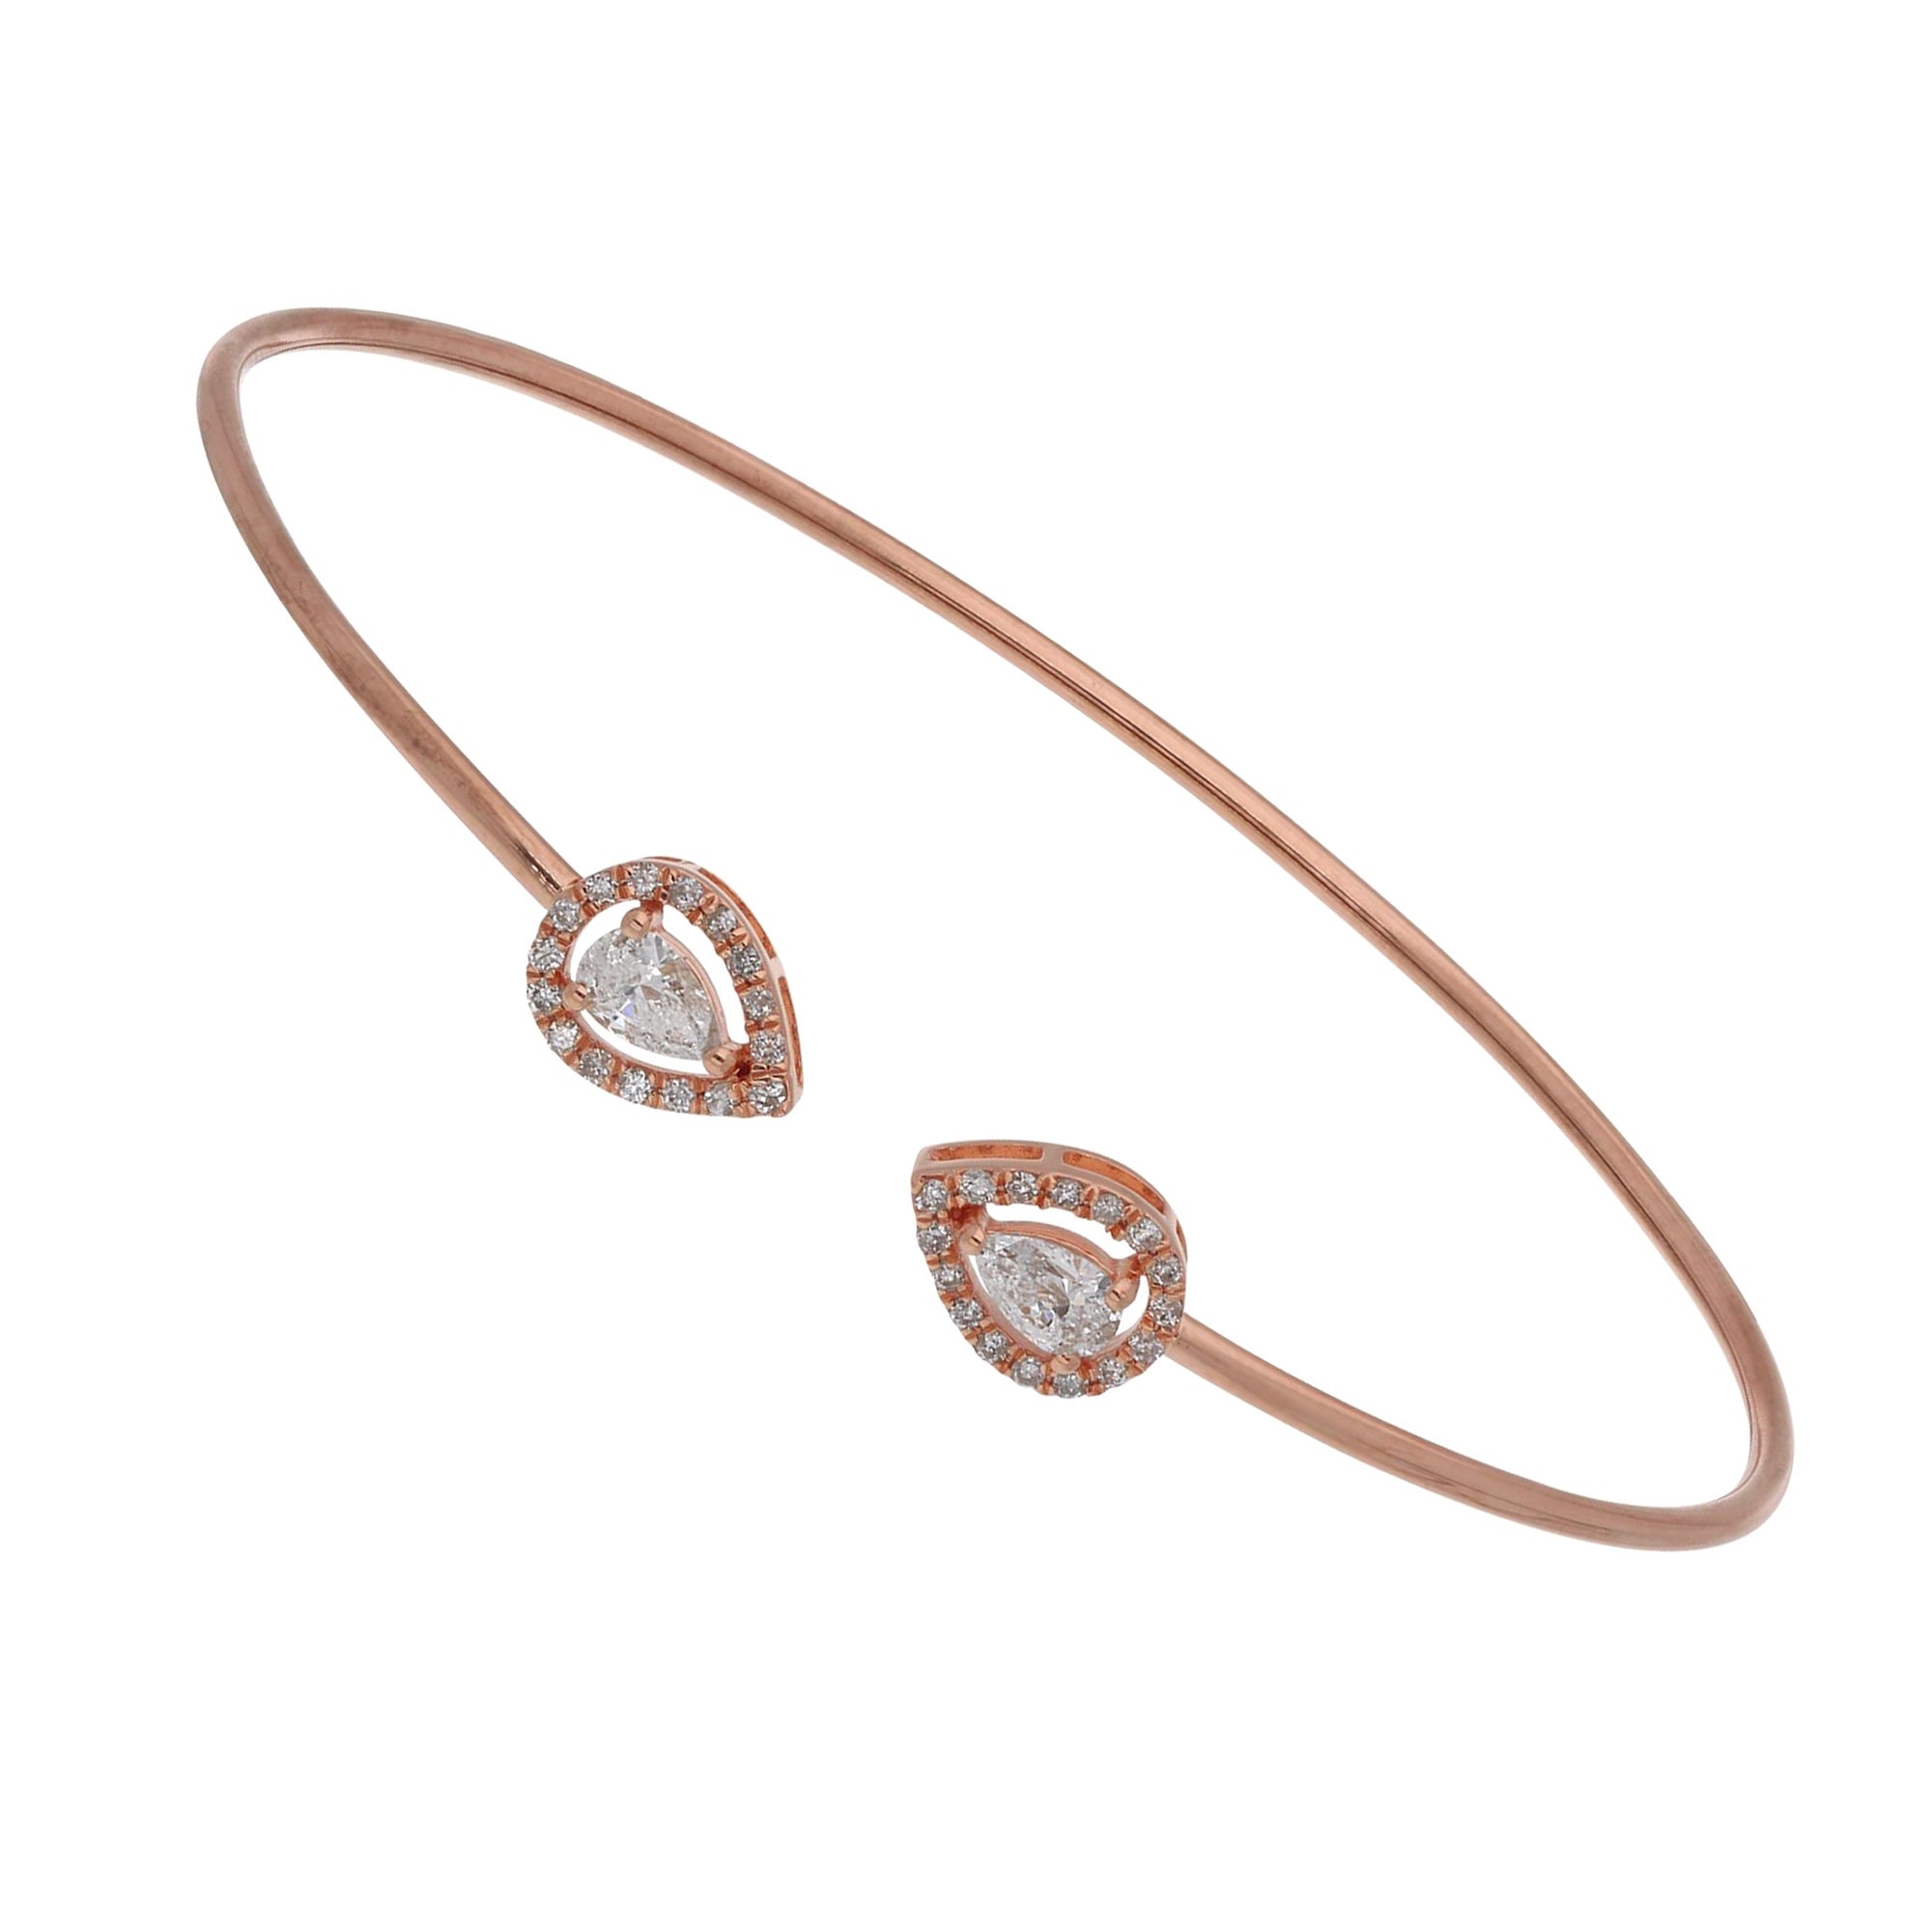 SI Clarity HI Color Pear Round Diamond Cuff Bangle Bracelet 18 Karat Rose Gold